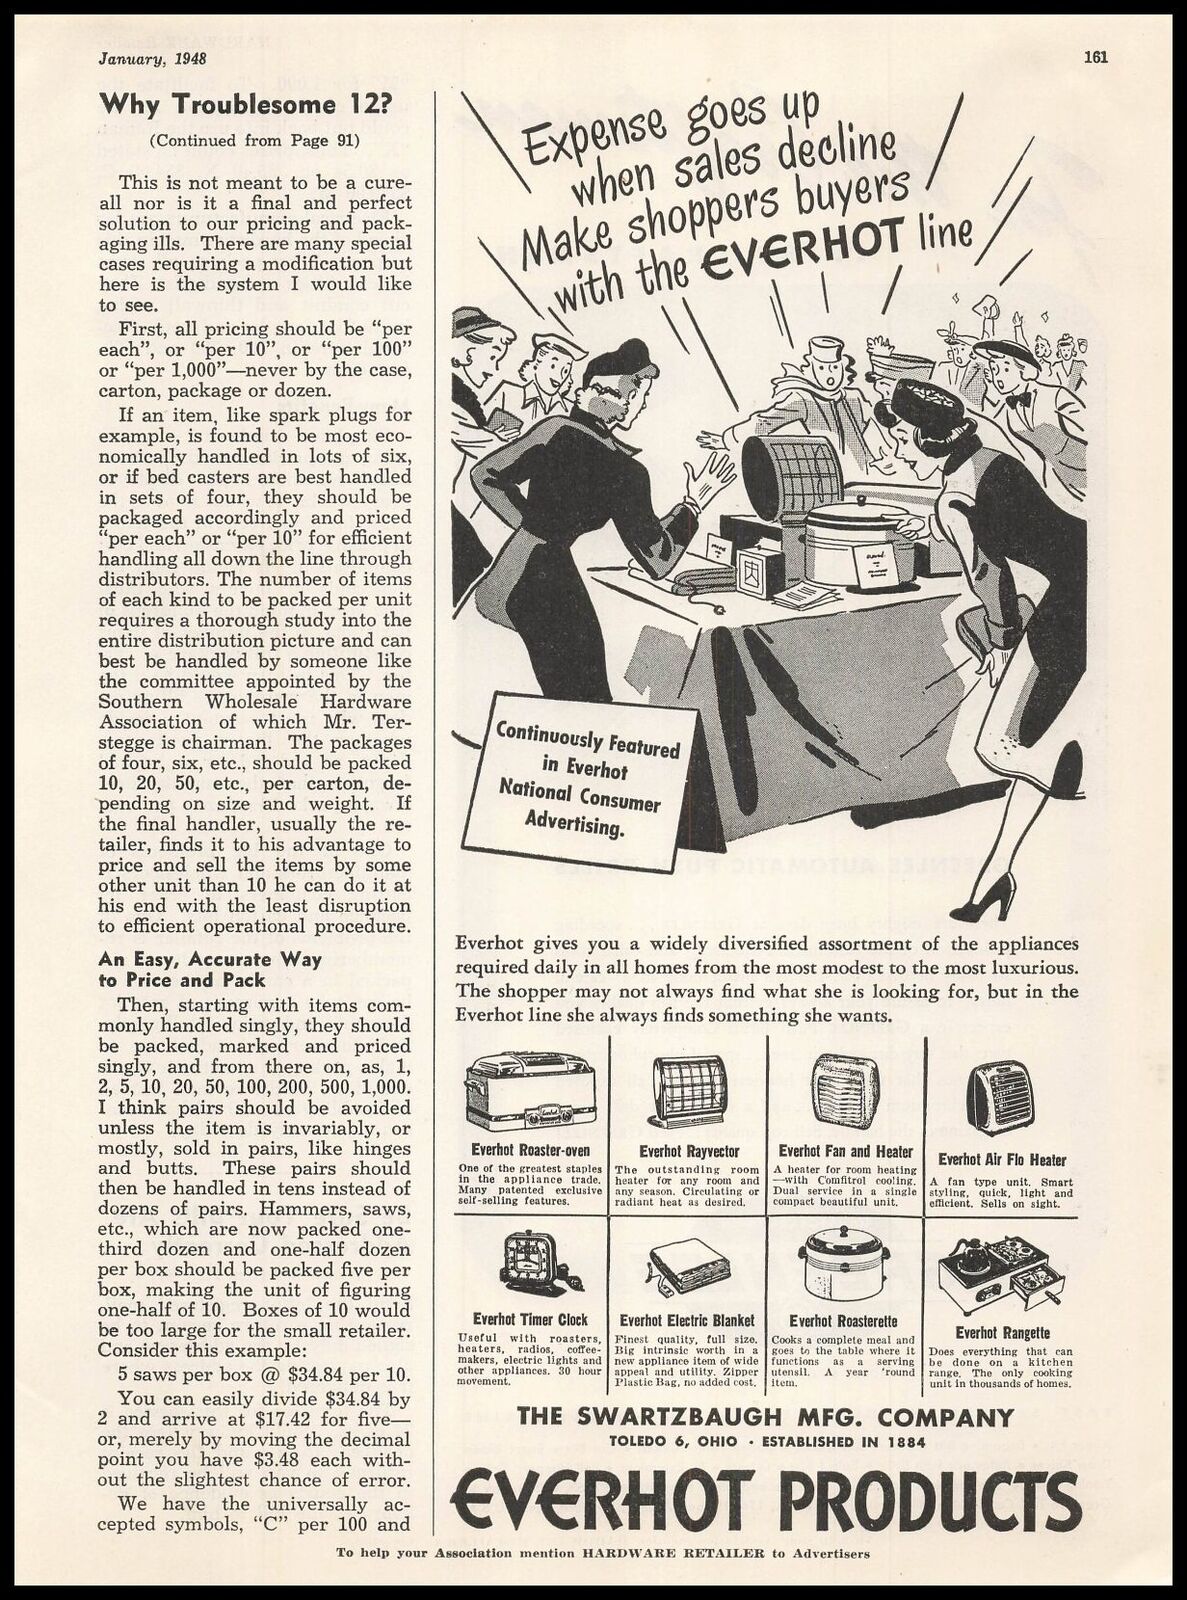 1948 Swartzbaugh Mfg Co Toledo Ohio Everhot Products Appliances Vintage Print Ad